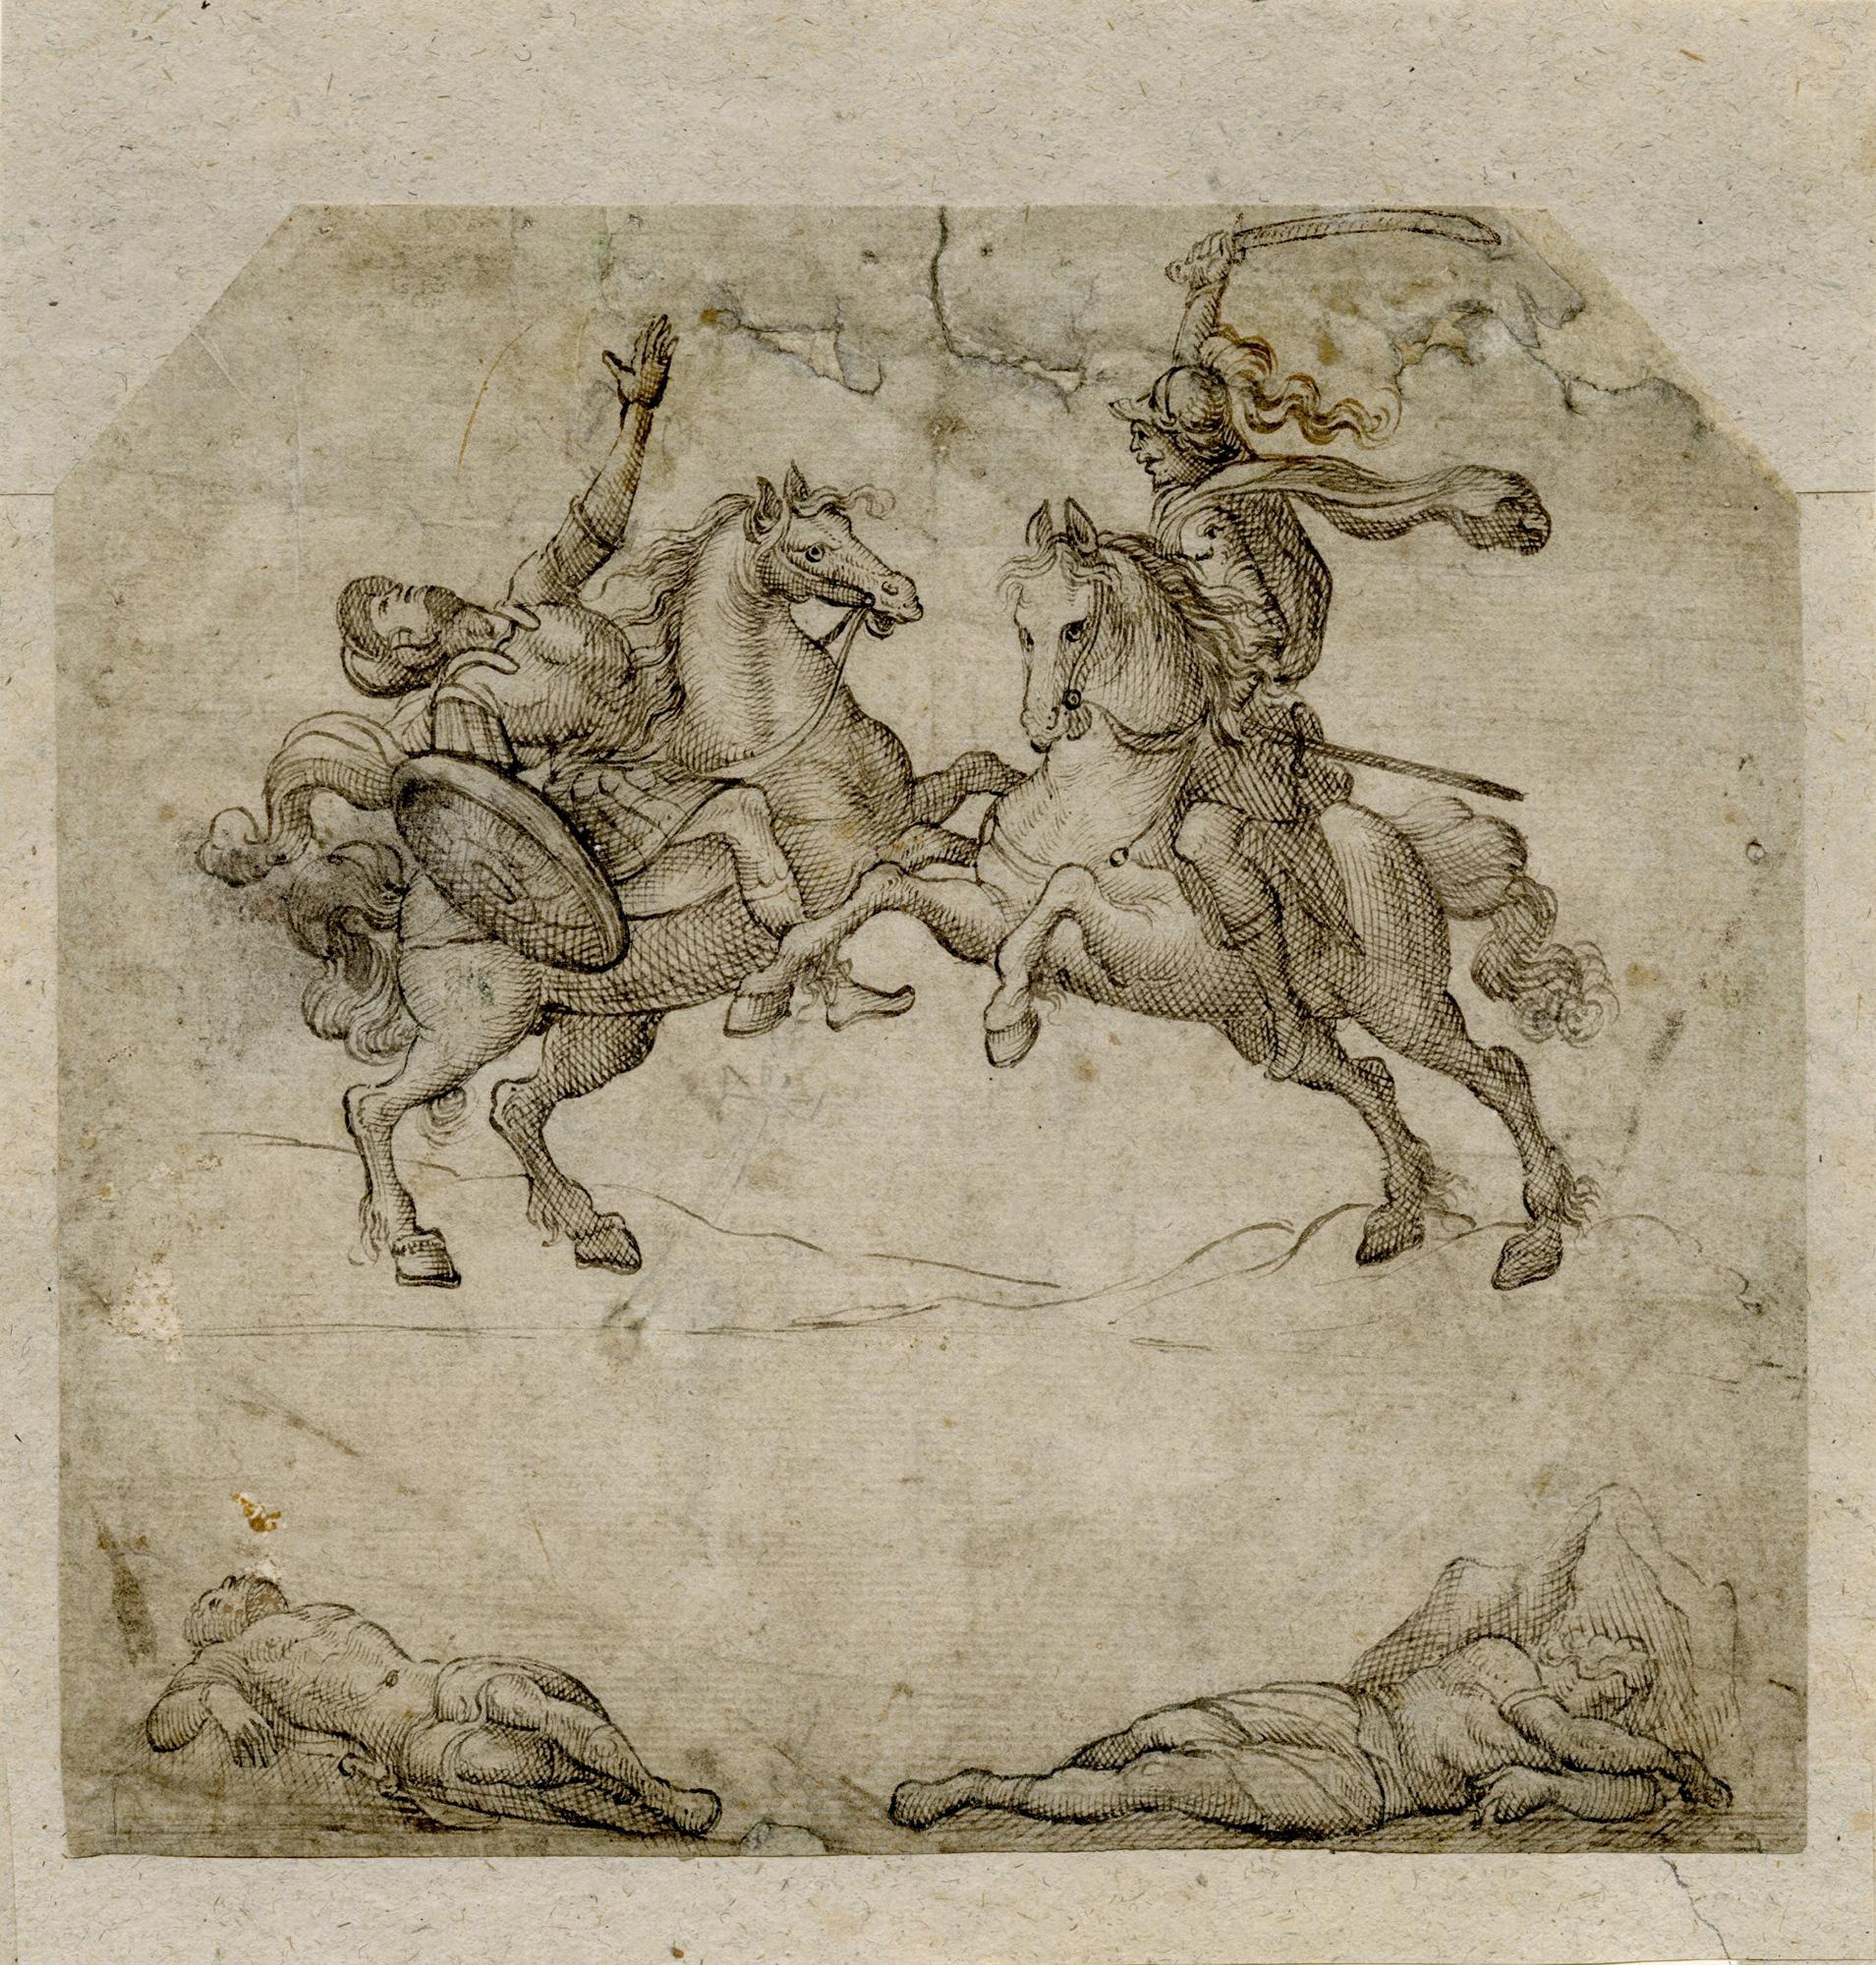 Virgil Solis Figurative Art - Mythological combat scene with Roman soldiers on horseback.